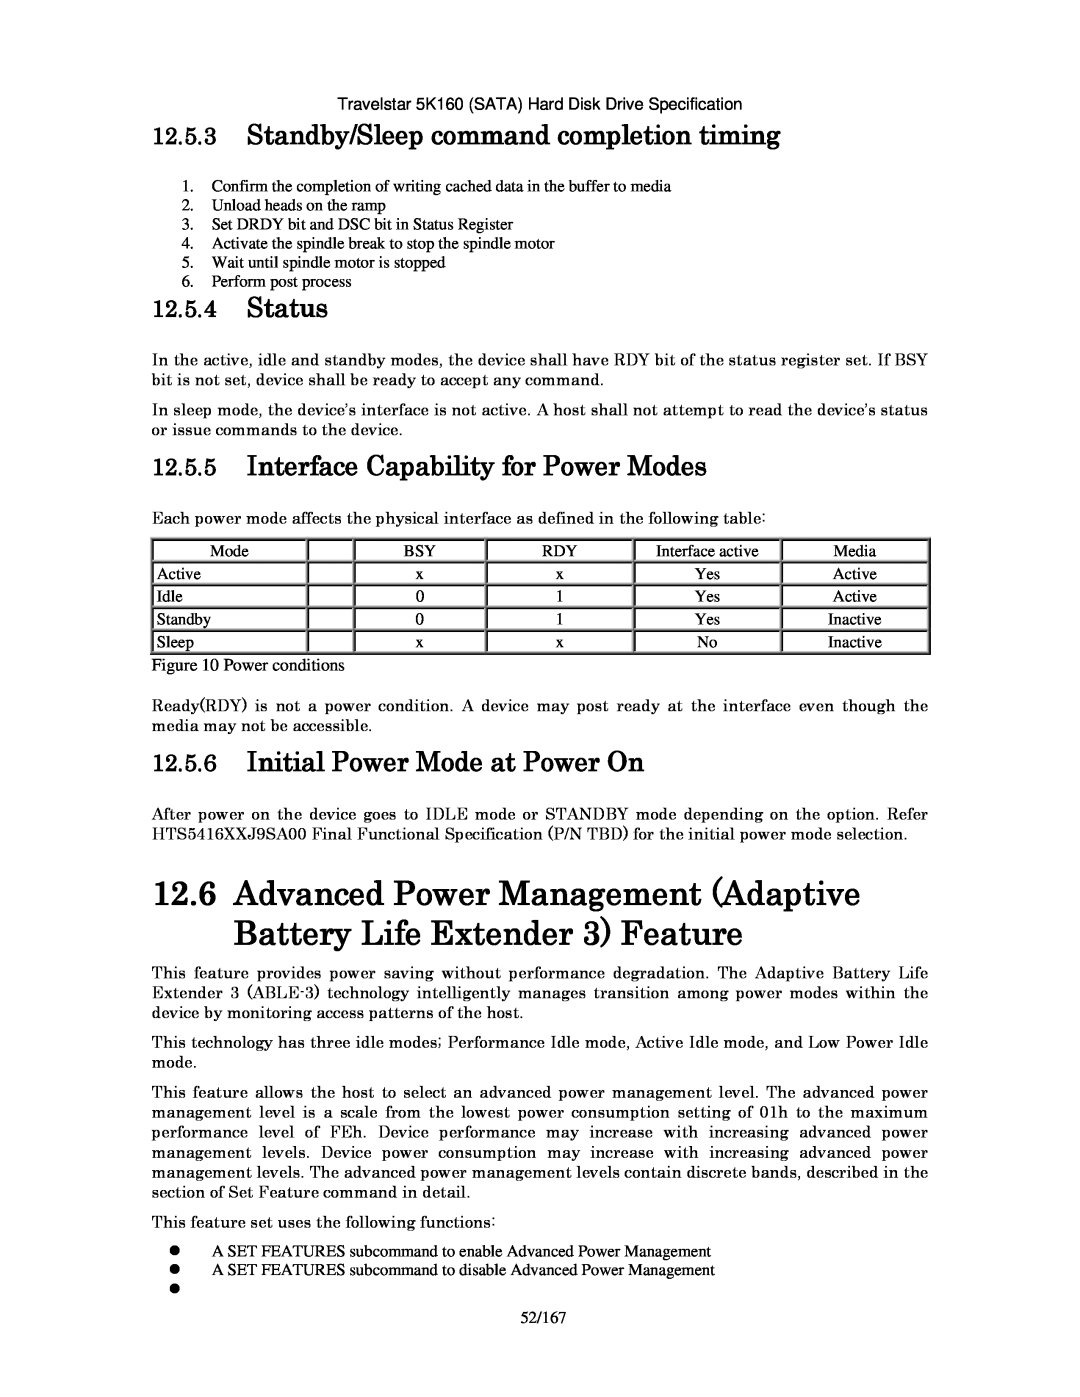 Hitachi HTS541616J9SA00, HTS541640J9SA00 manual Advanced Power Management Adaptive, Battery Life Extender 3 Feature, Status 